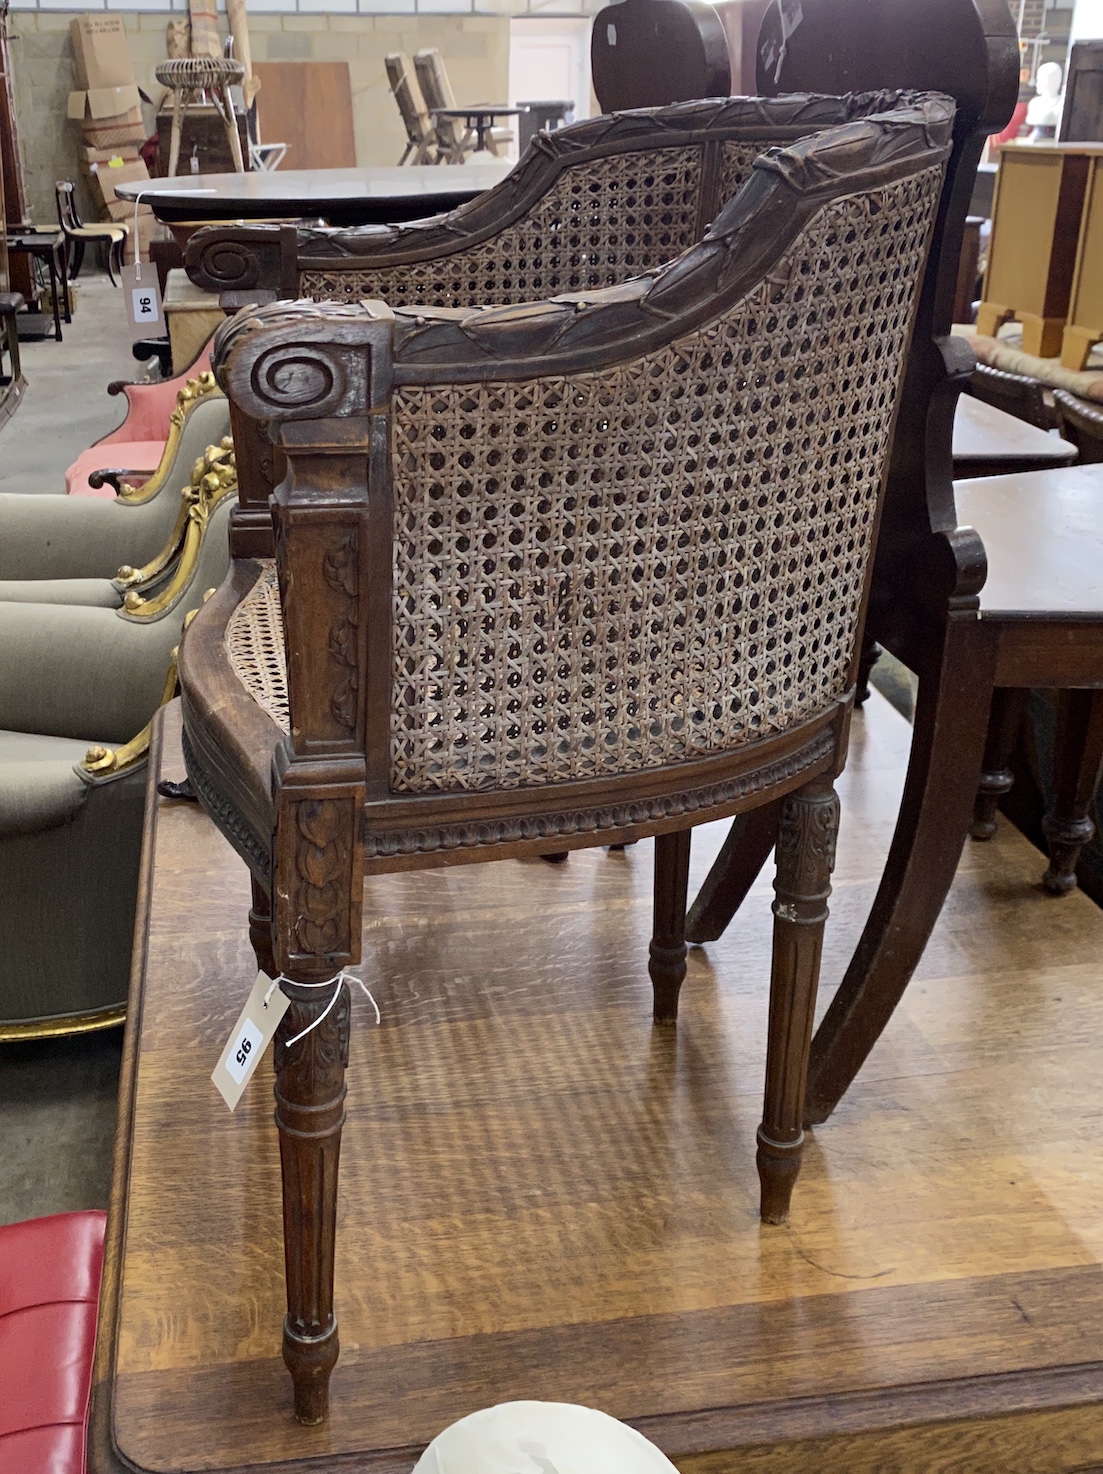 A Louis XVI style caned walnut Bergere chair, width 57cm, depth 44cm, height 79cm